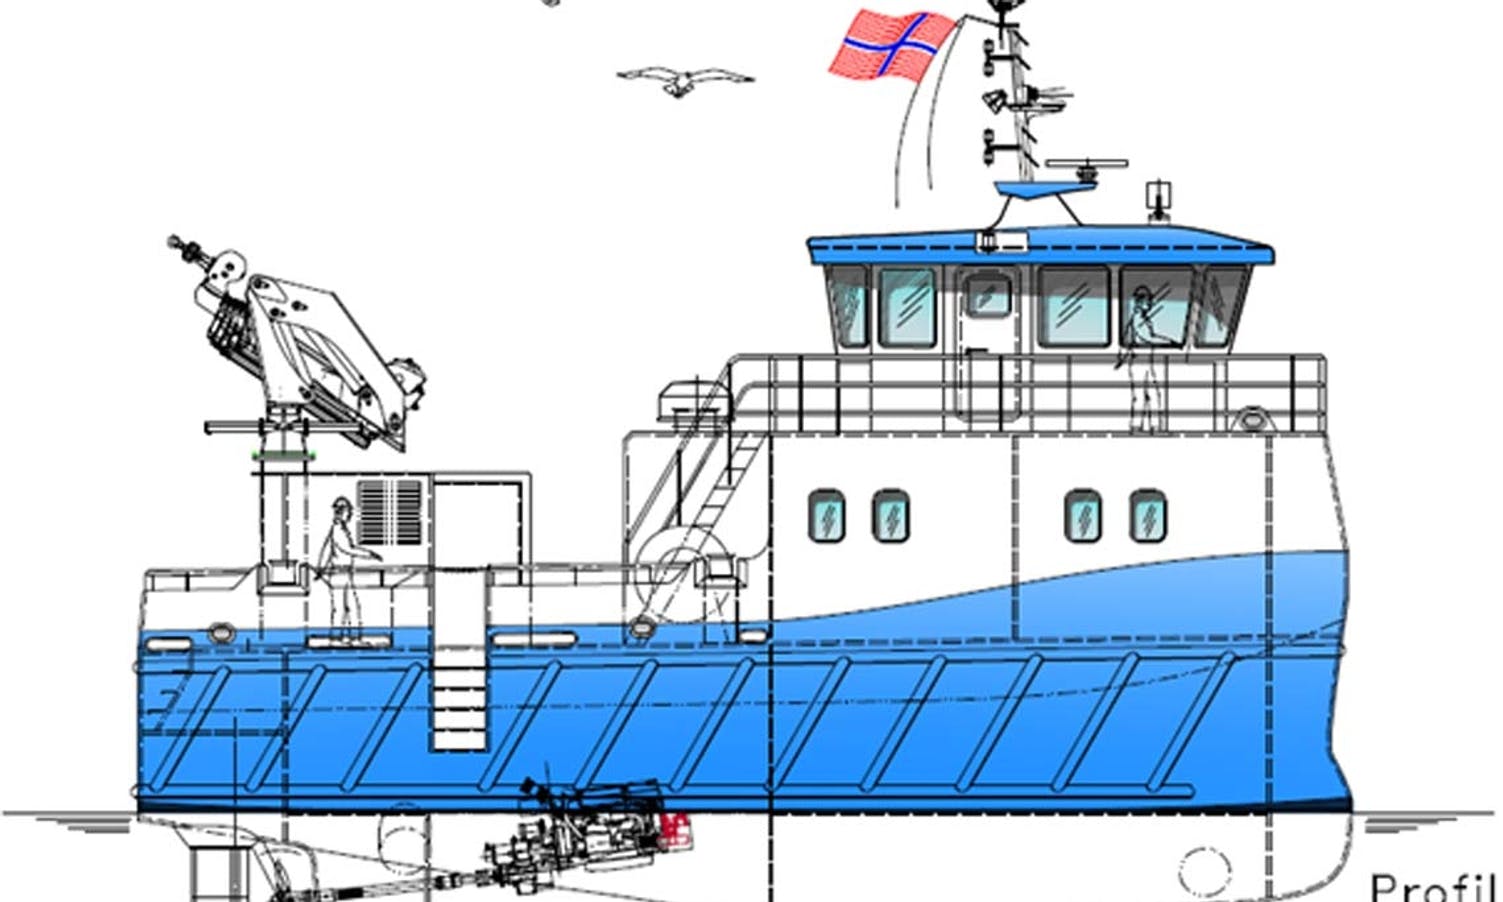 Denne katamaren skal vera ferdigbygd på Radøy før jul. (Skisse: Maritime Engineering)